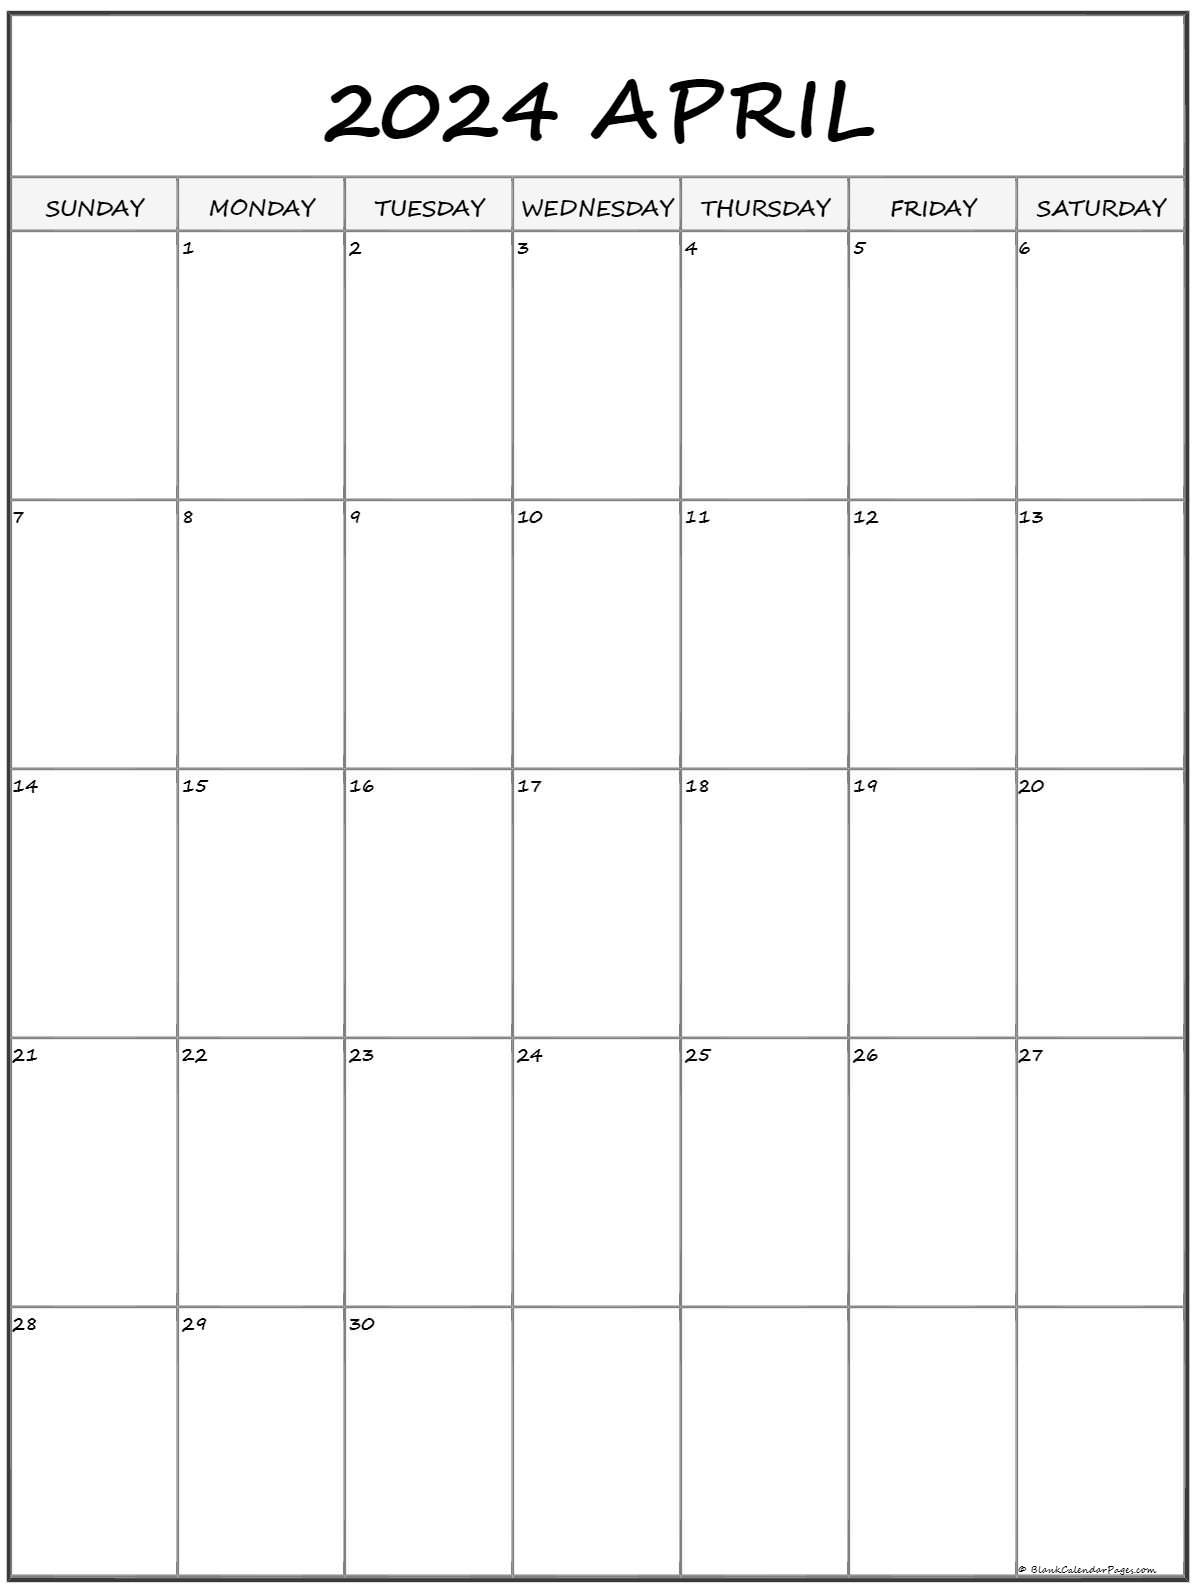 april-2023-calendar-vertical-get-latest-map-update